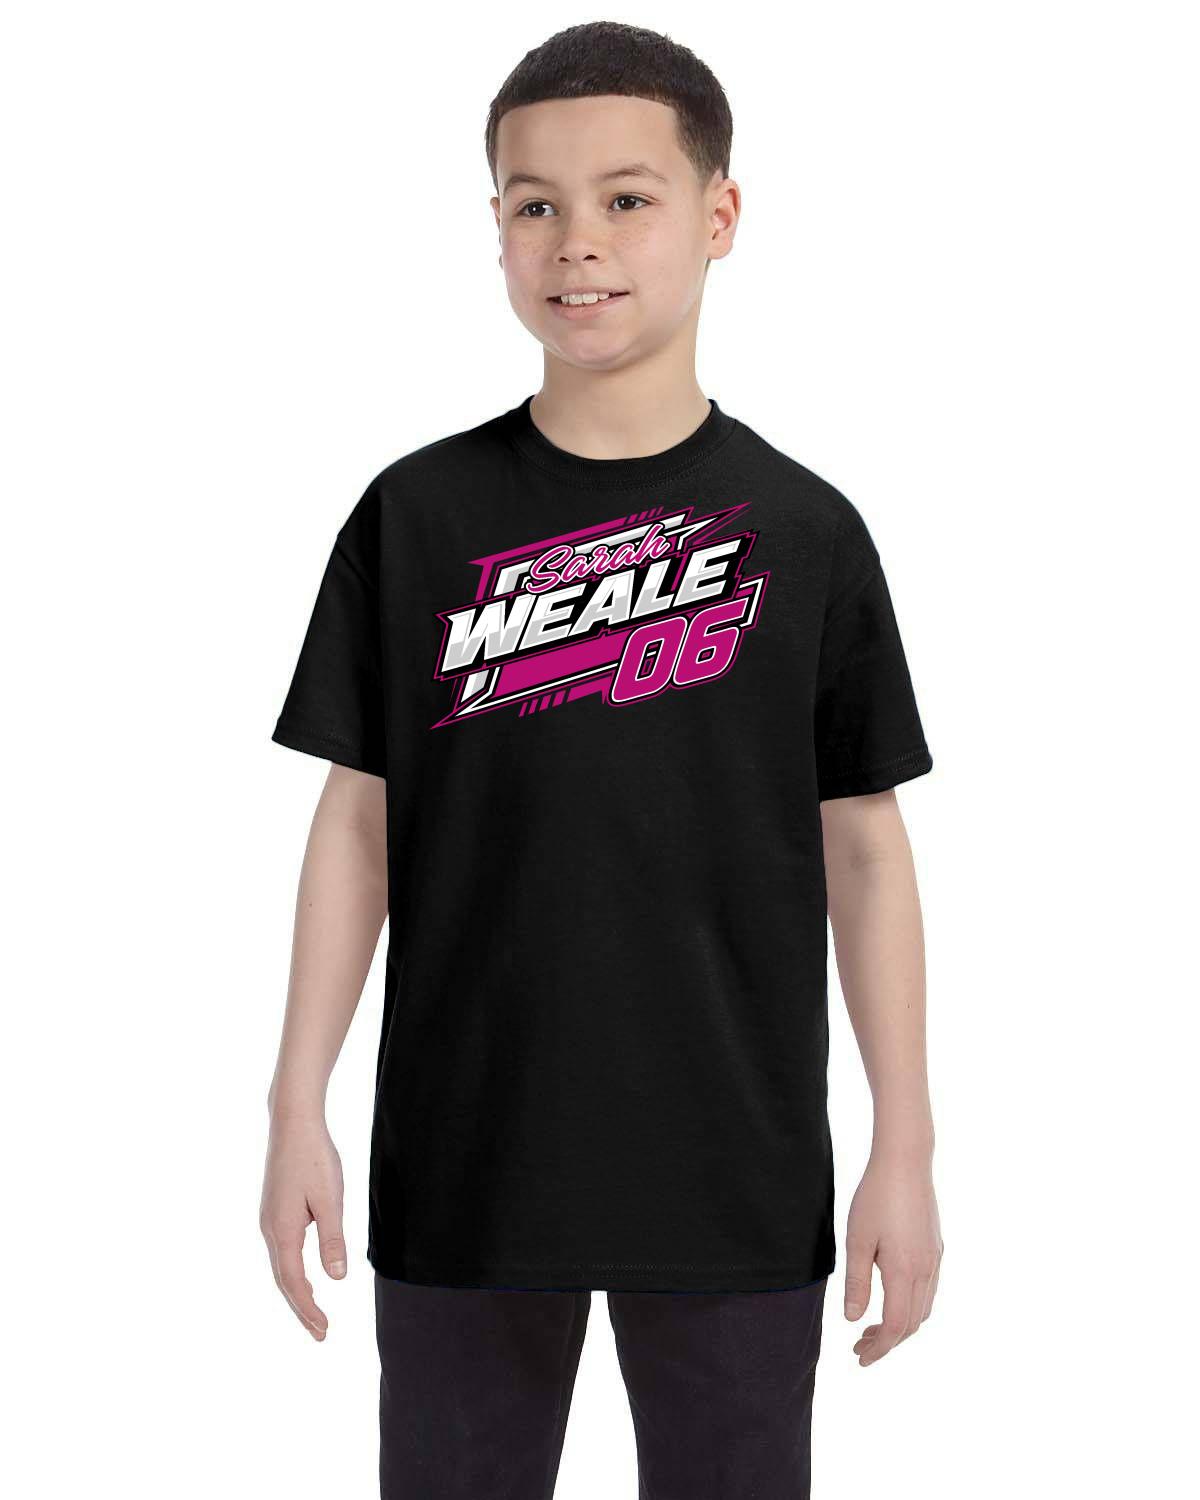 Sarah Weale Racing Youth T-Shirt